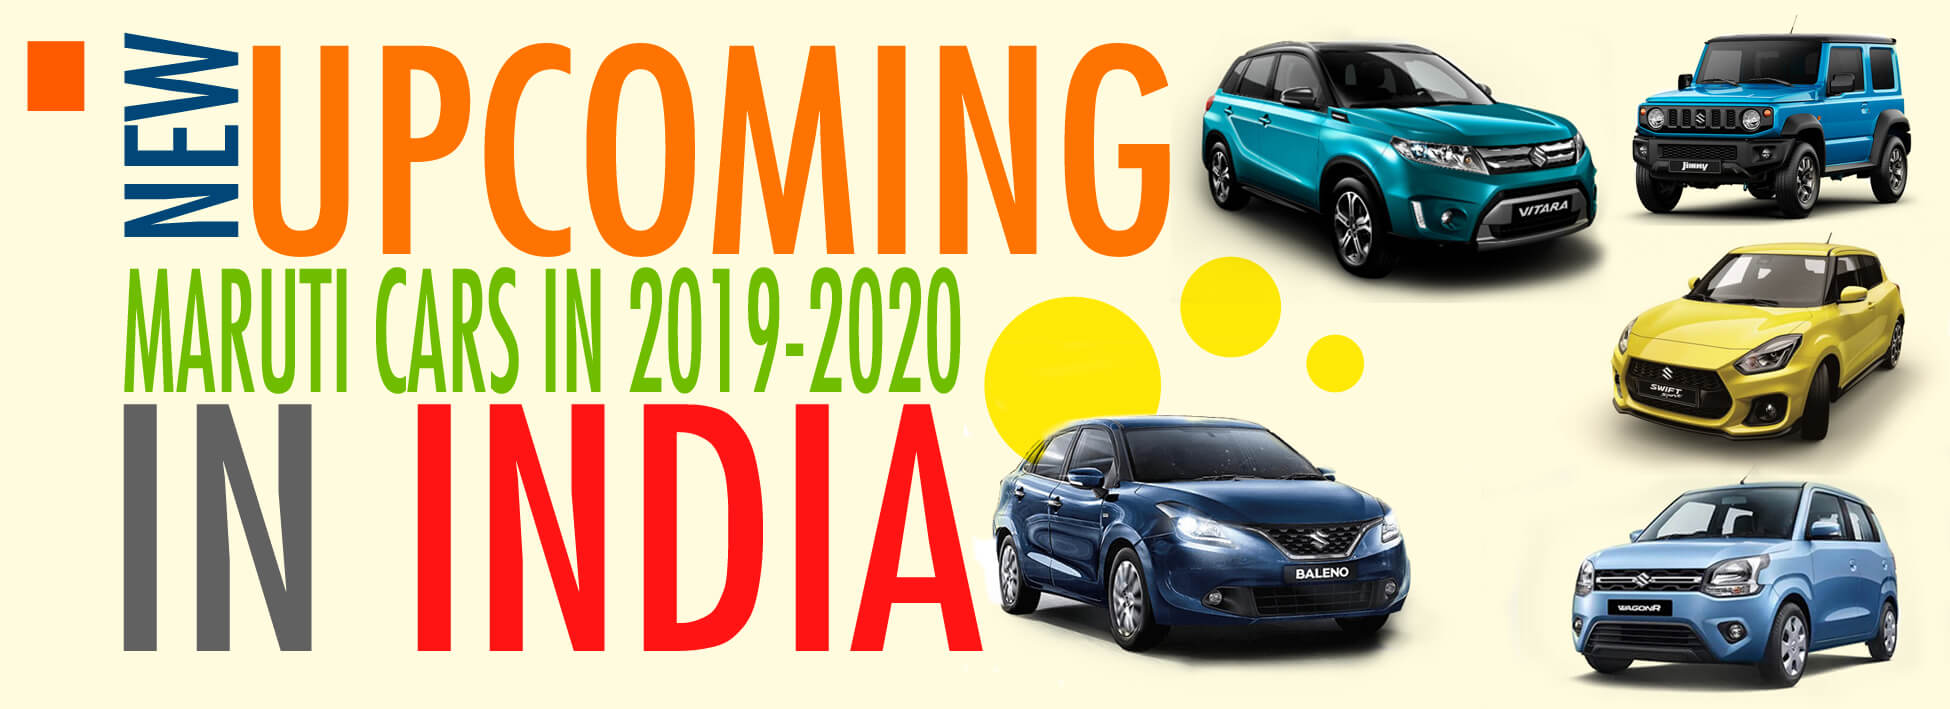 Upcoming Maruti Suzuki Cars in 2019-2020 in India